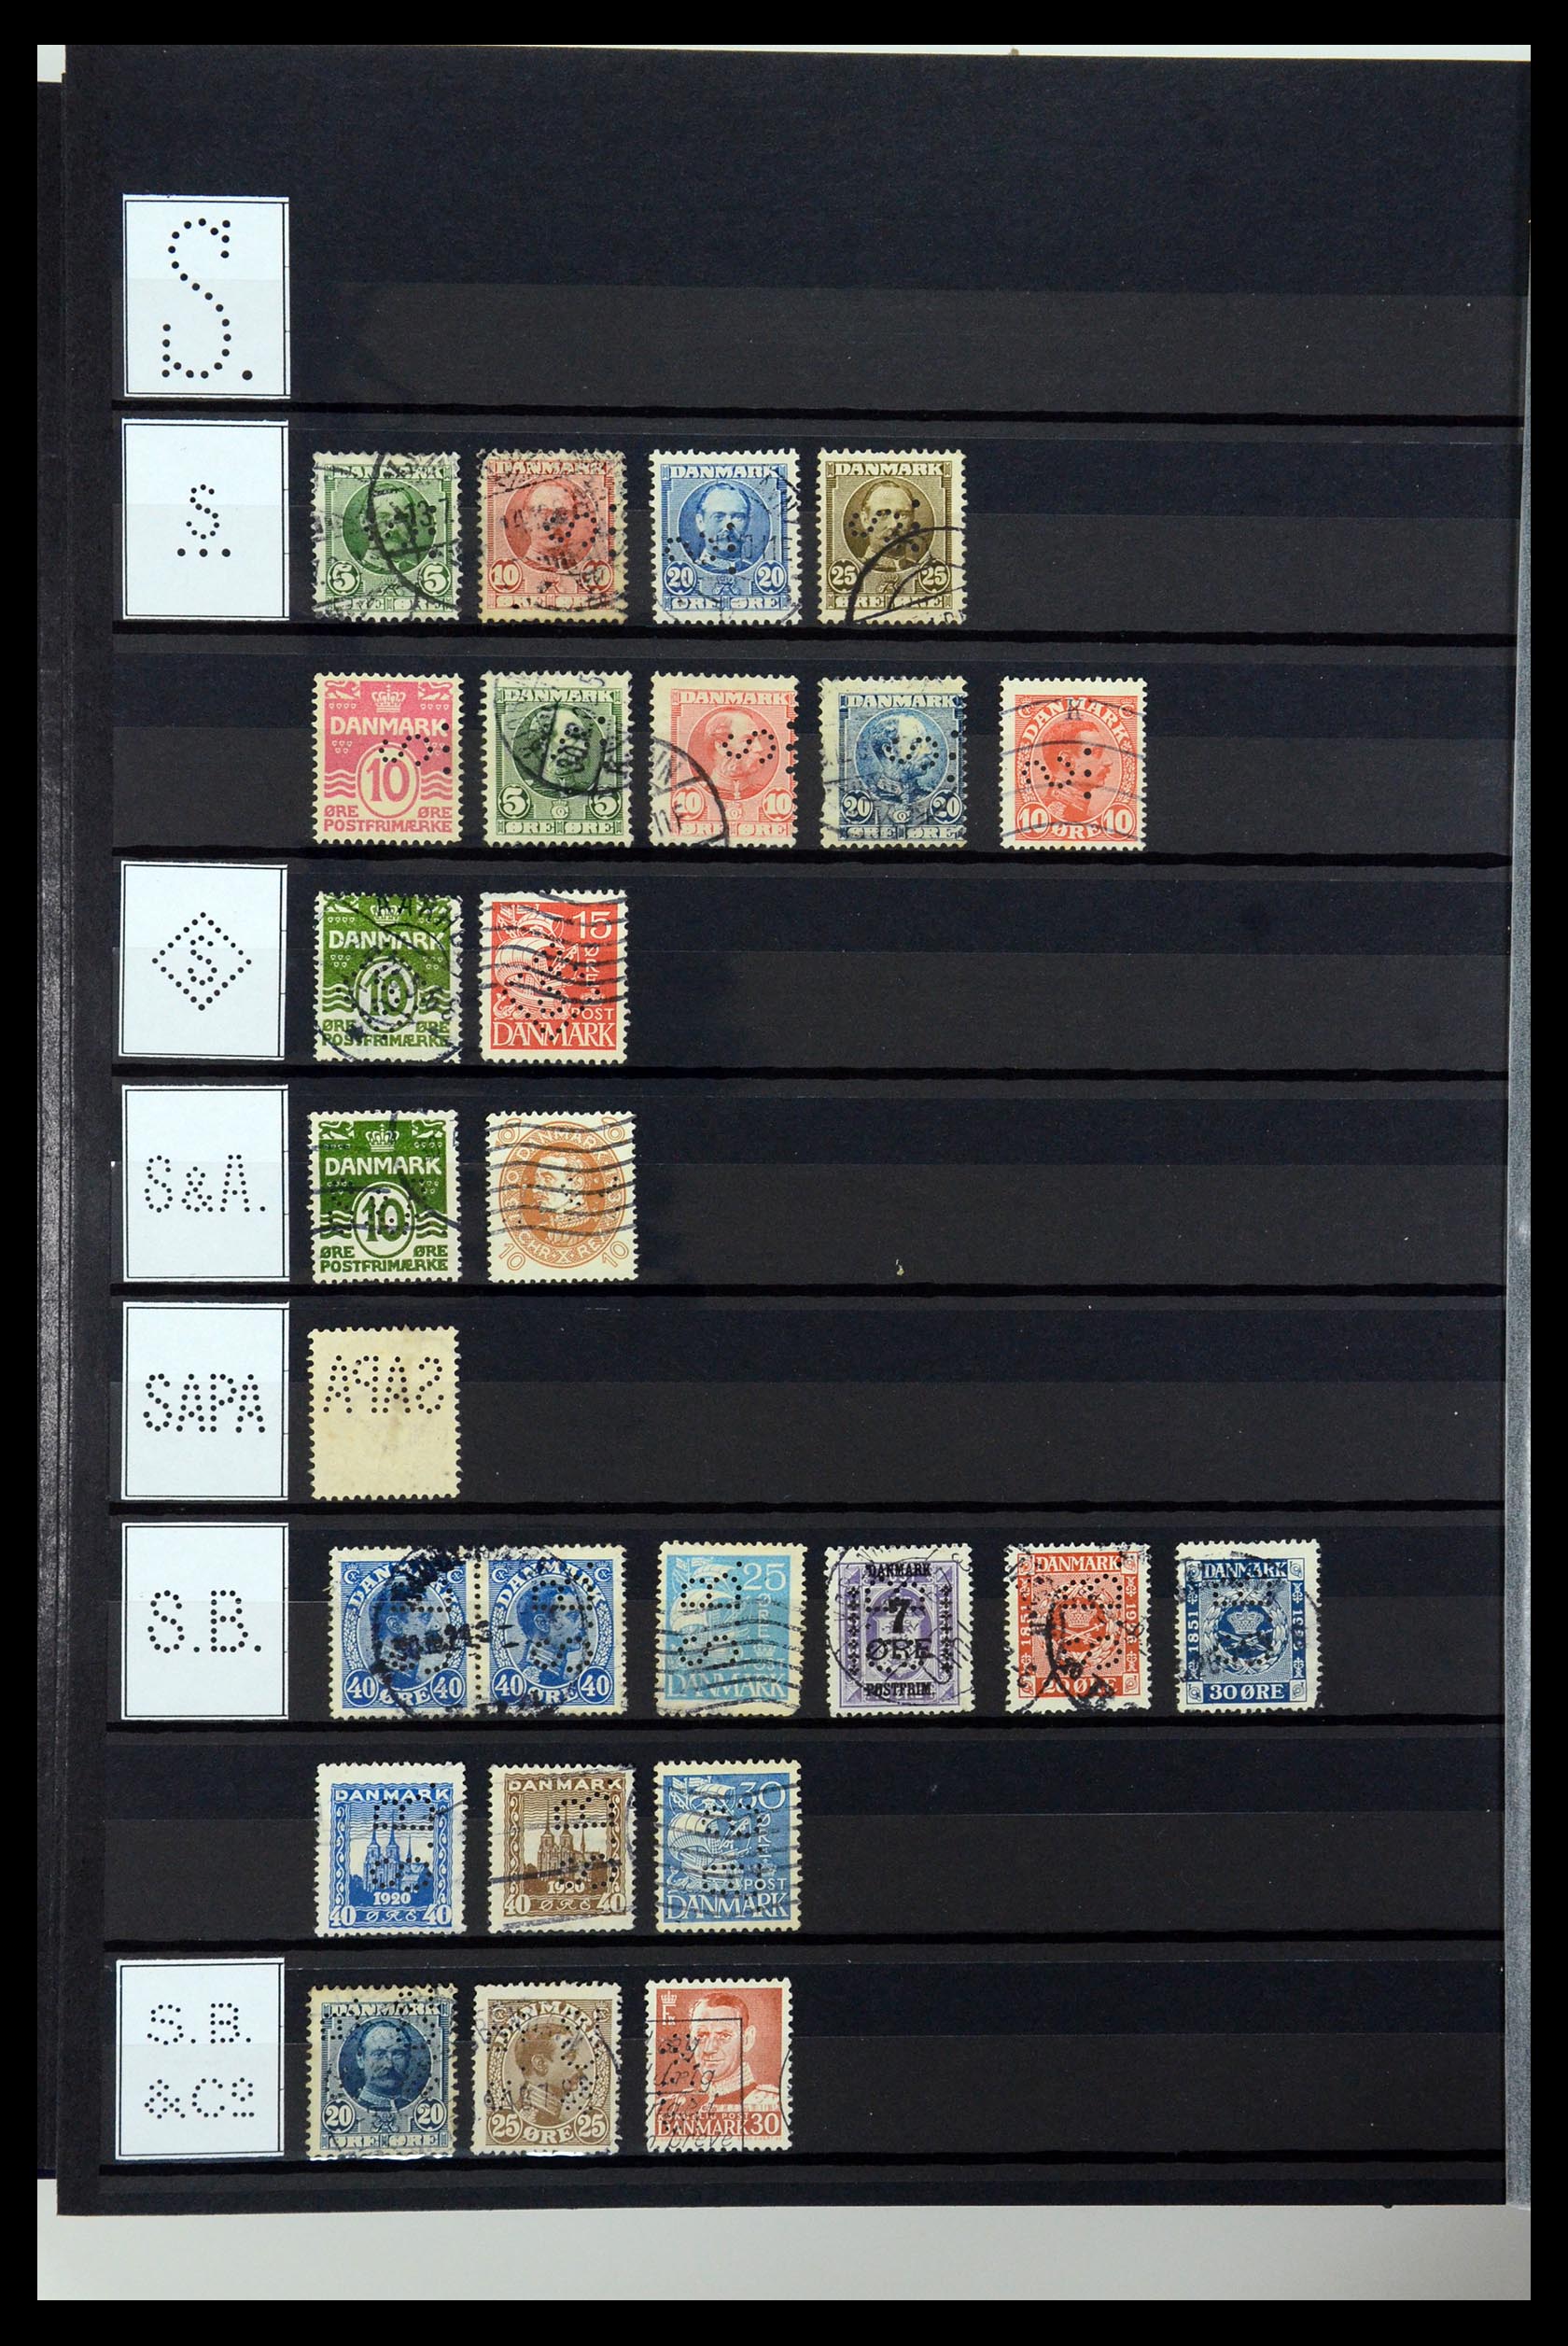 36396 205 - Stamp collection 36396 Denmark perfins.